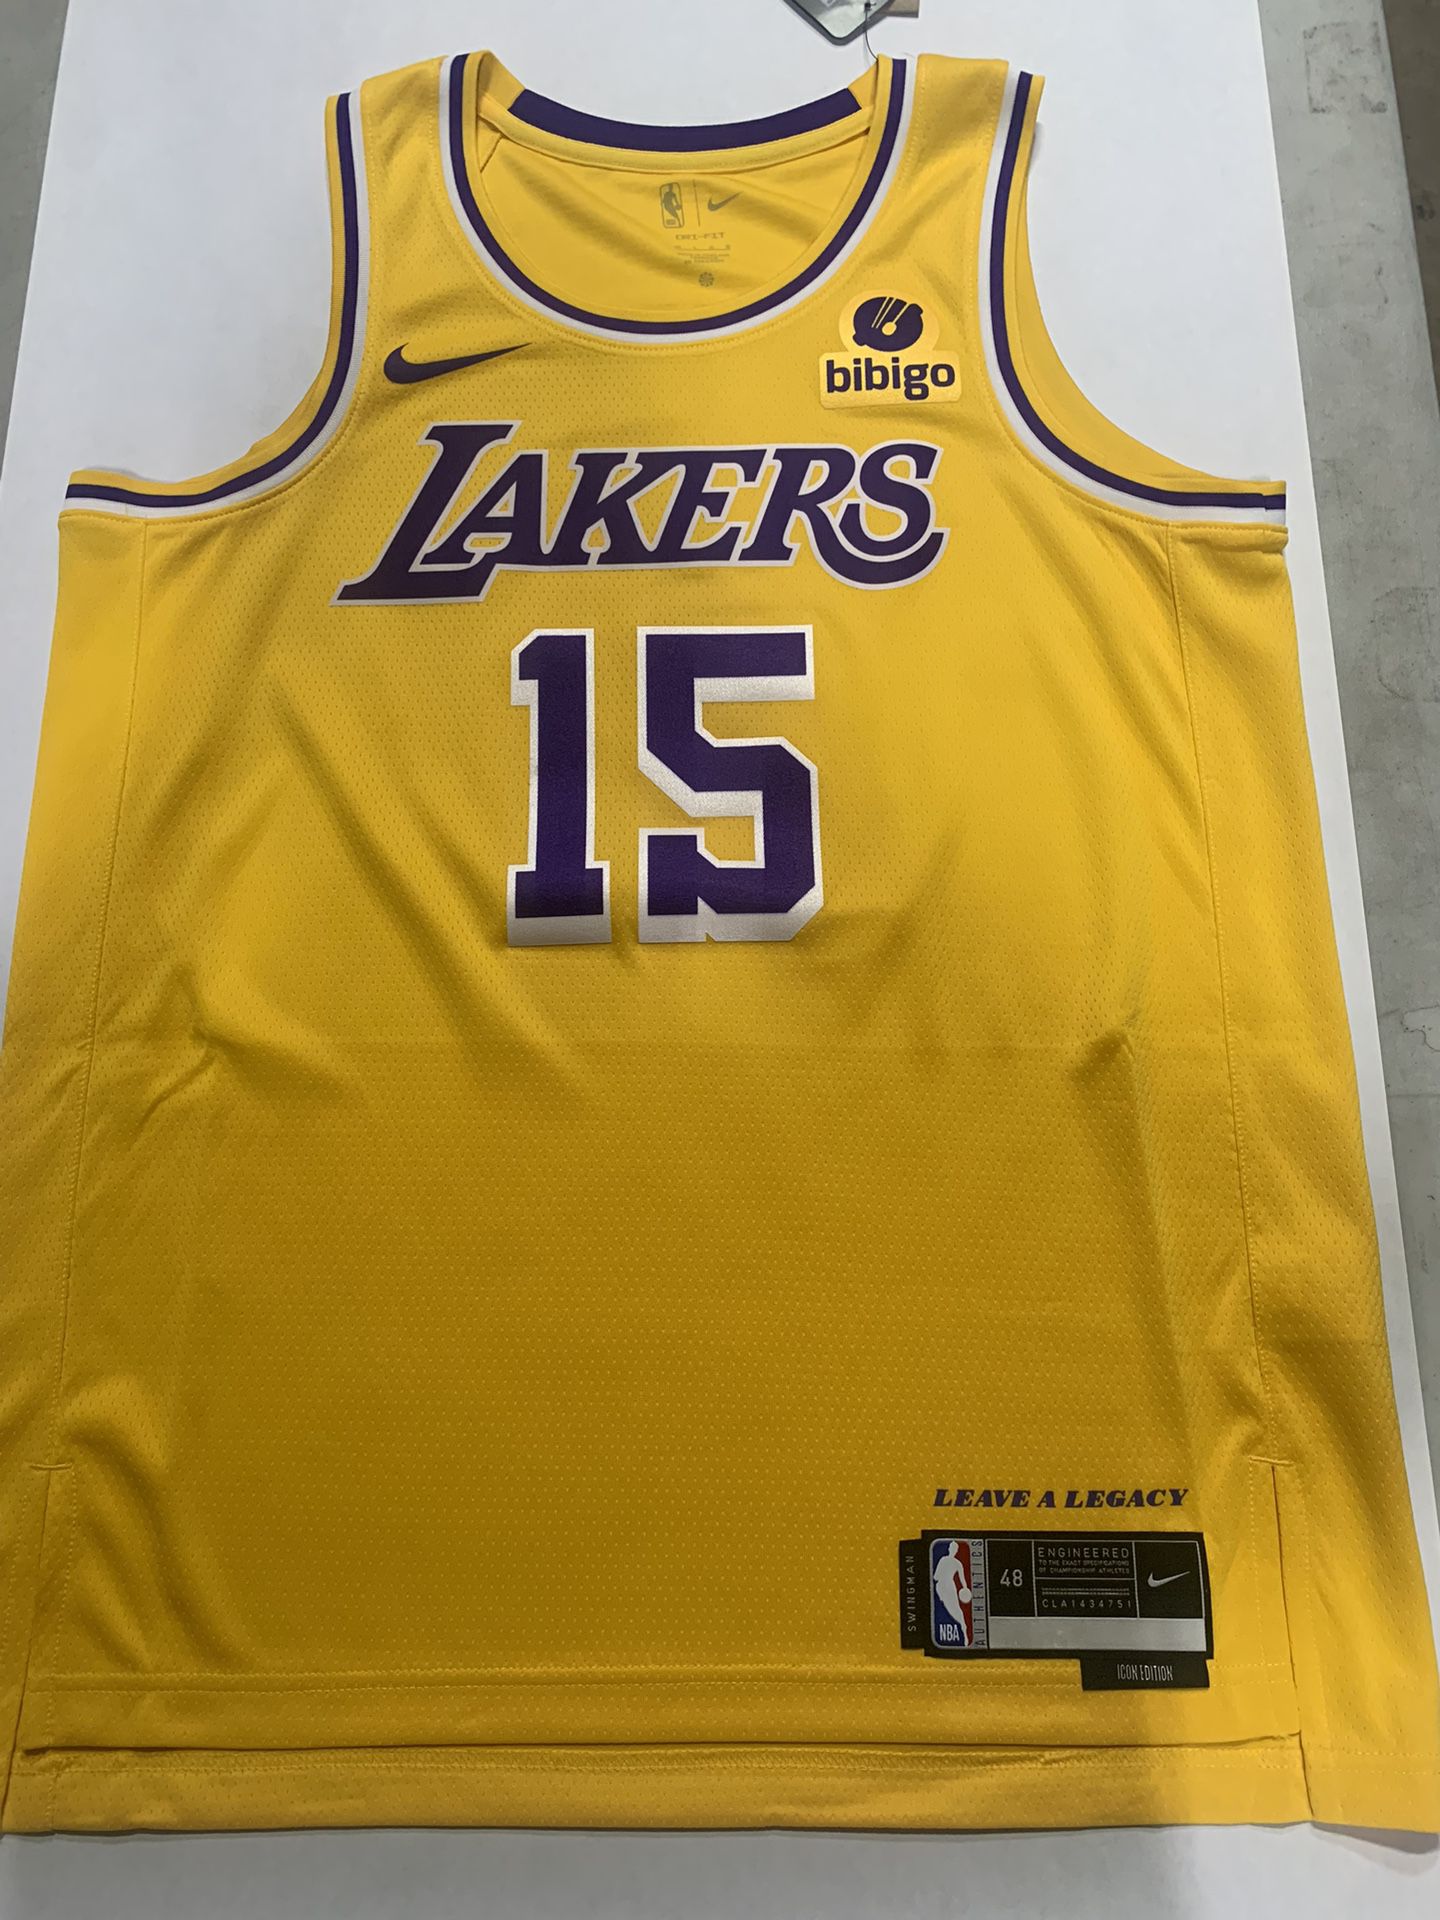 Who is Bibigo, the latest Los Angeles Lakers jersey sponsor